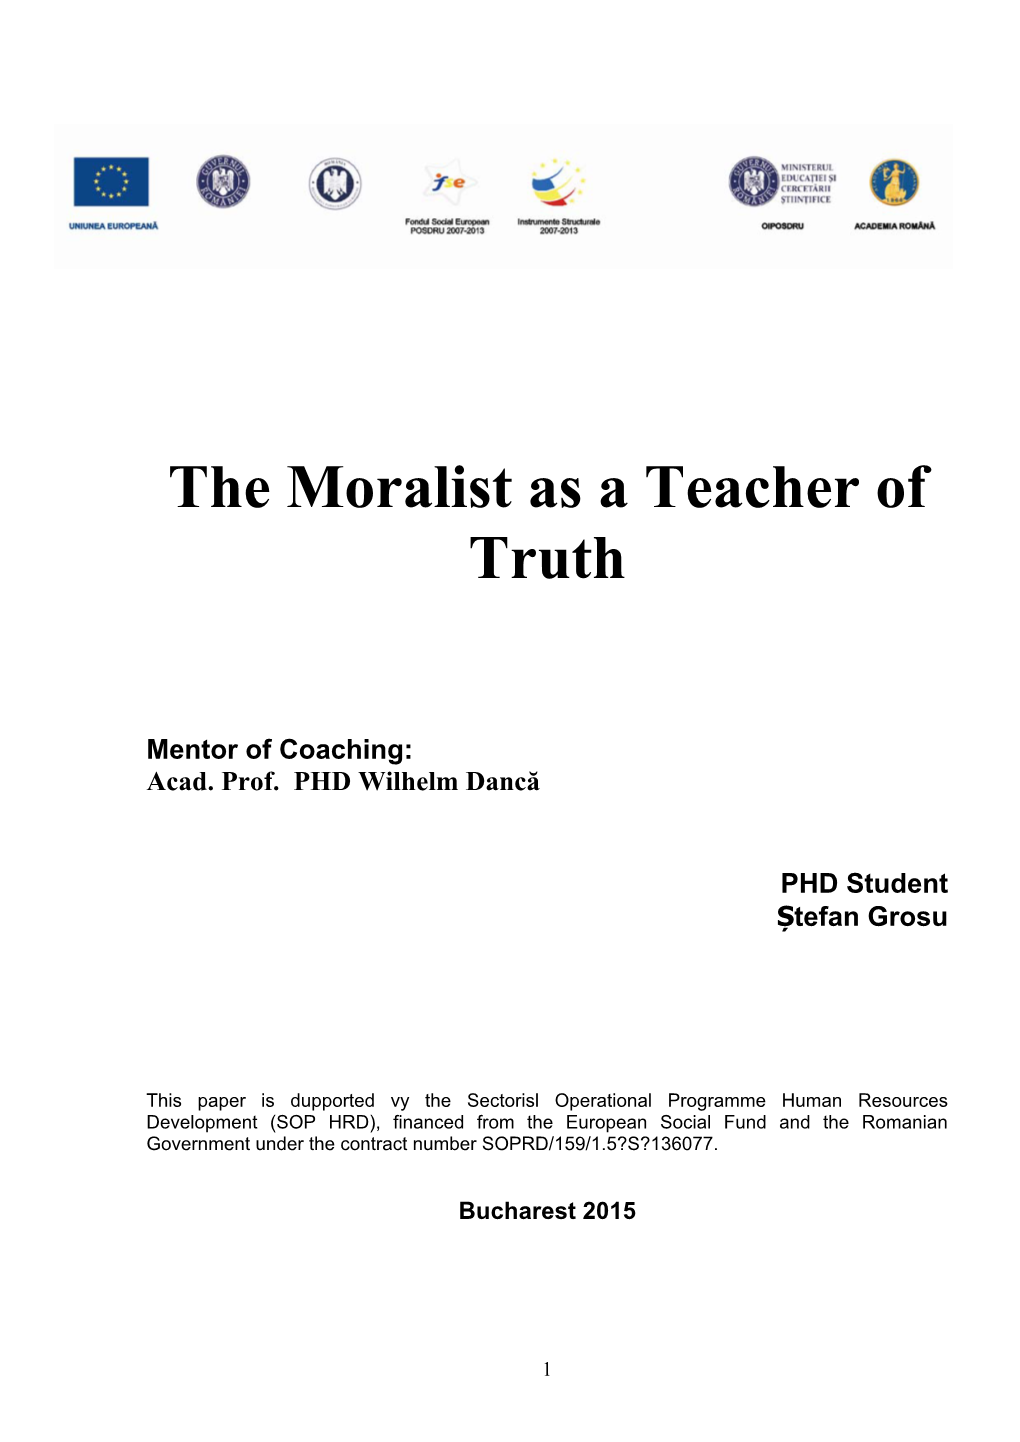 The Moralist As a Teacher of Truth